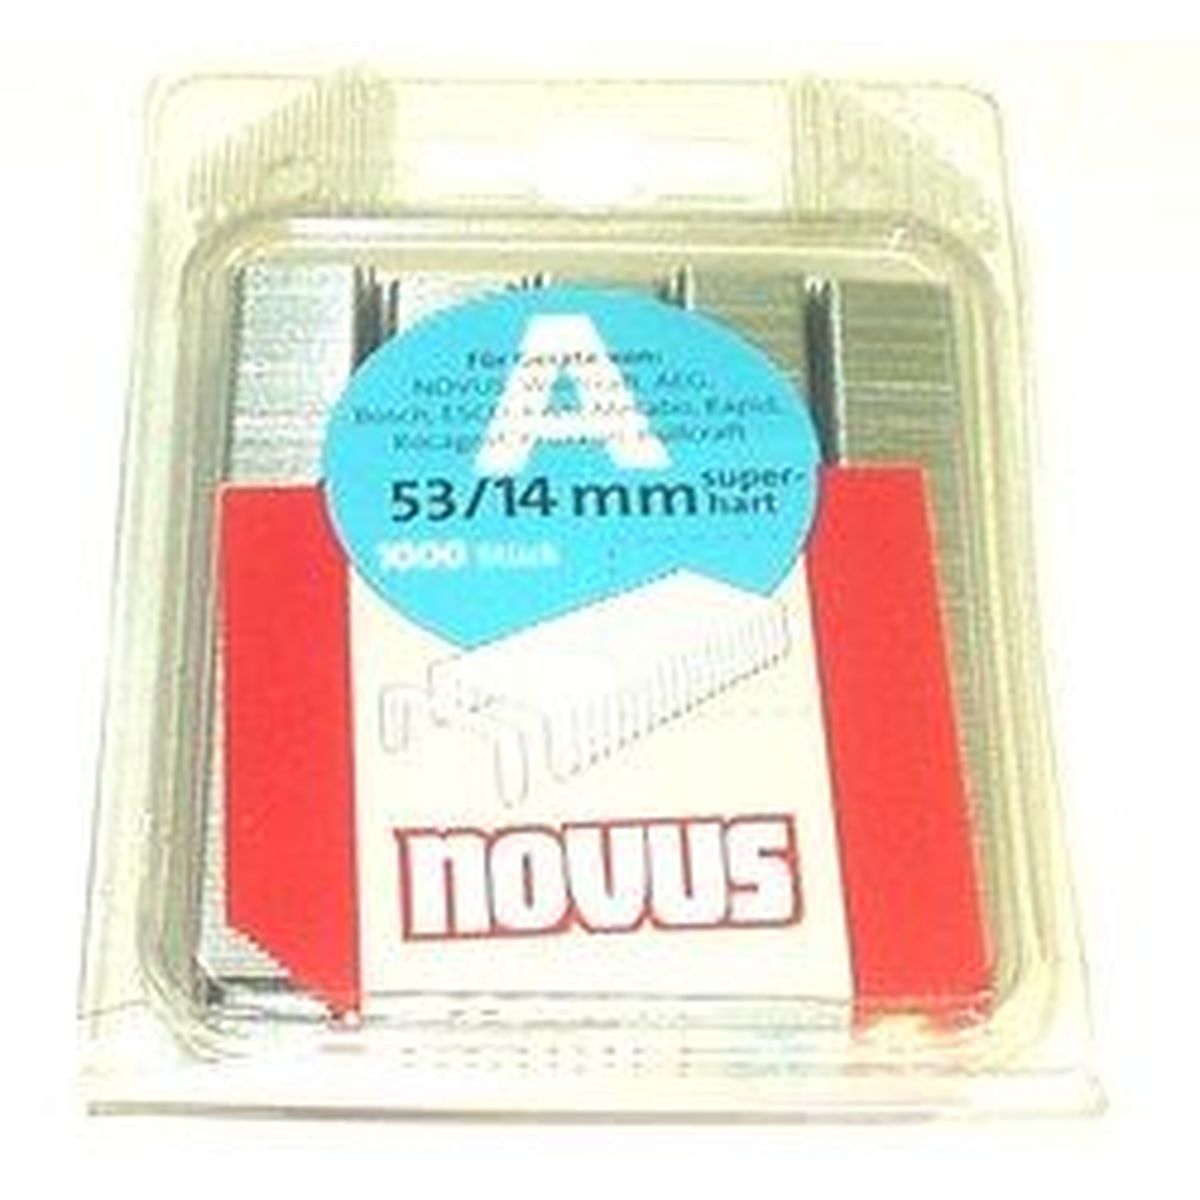 Staples 14mm A53/1000pcs Nr.042-0359 Novus